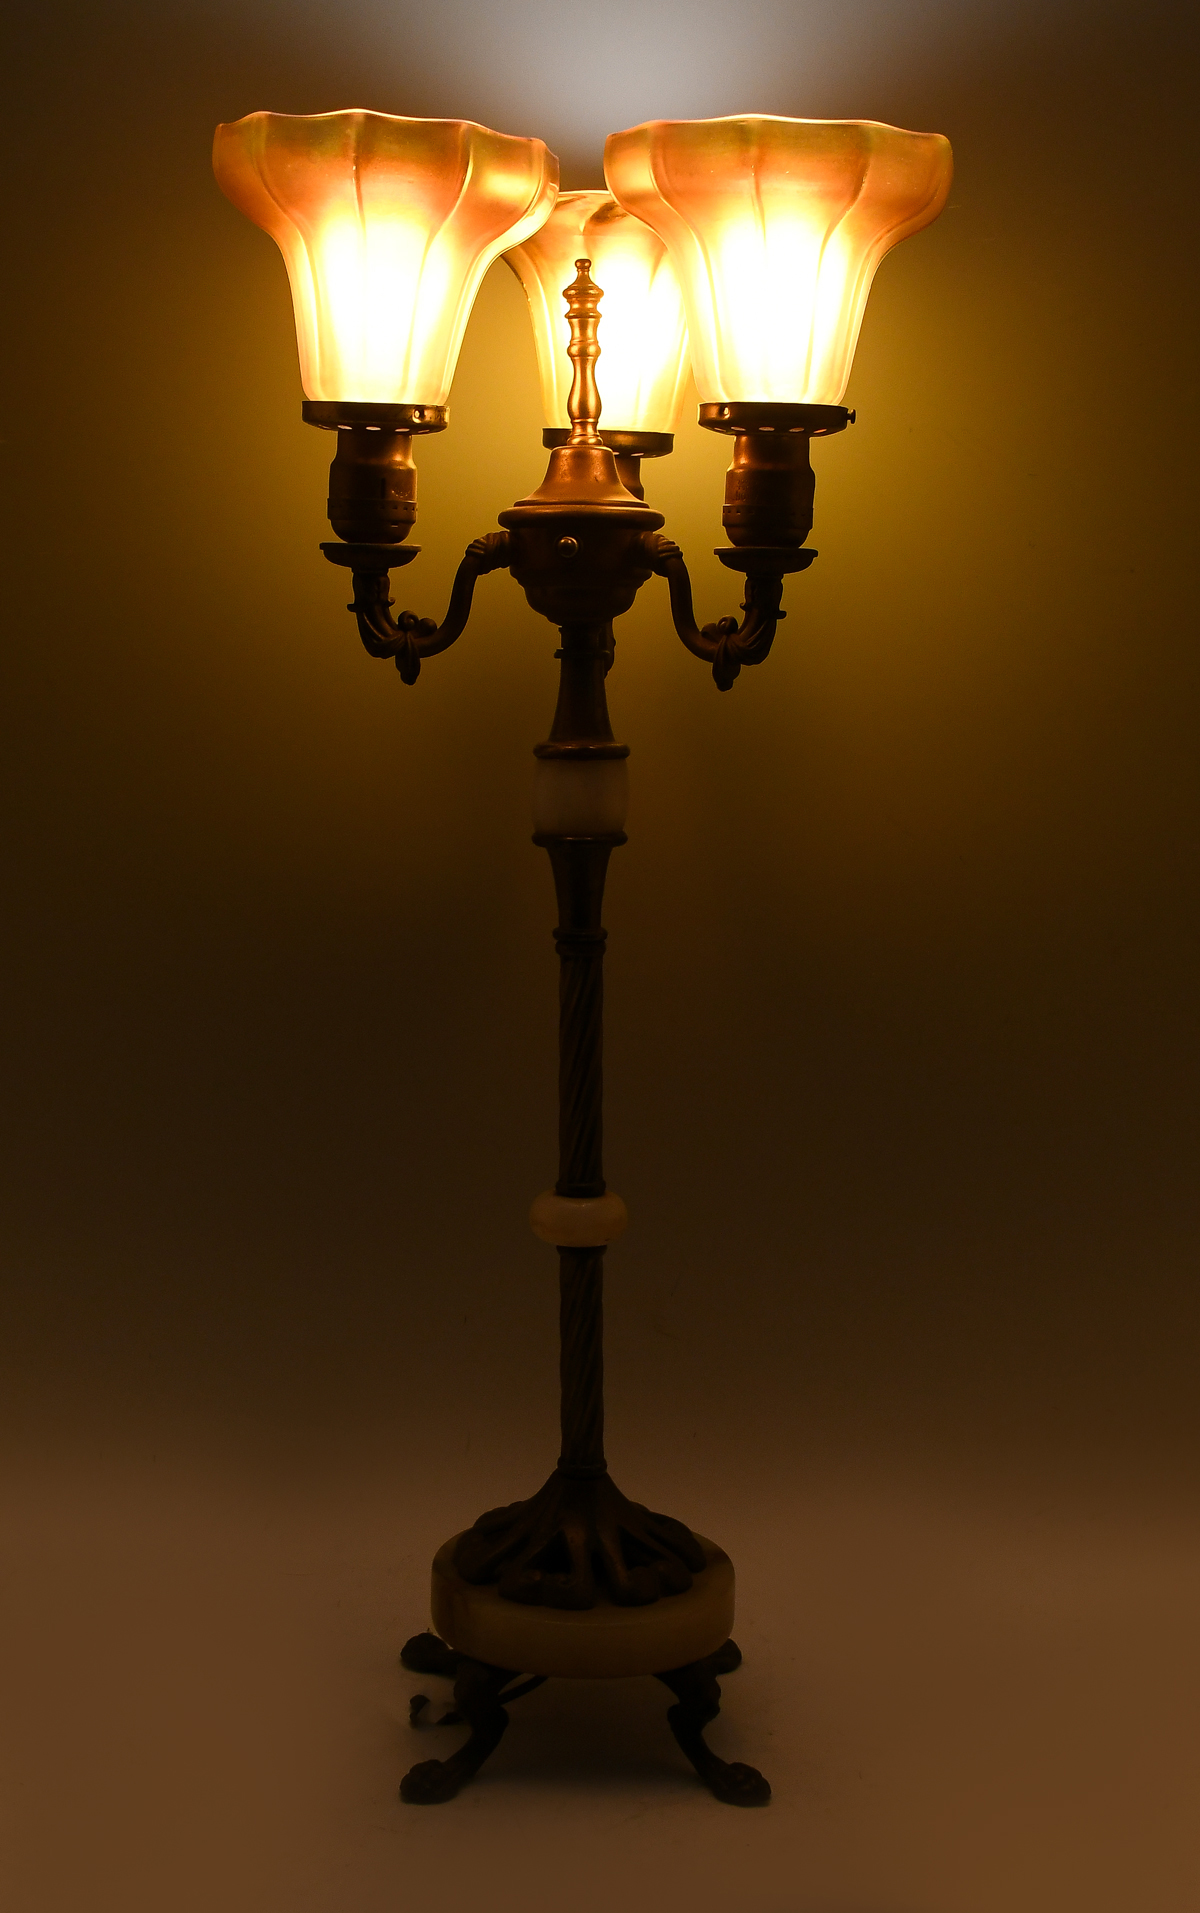 ART DECO 3 LIGHT LAMP WITH ART